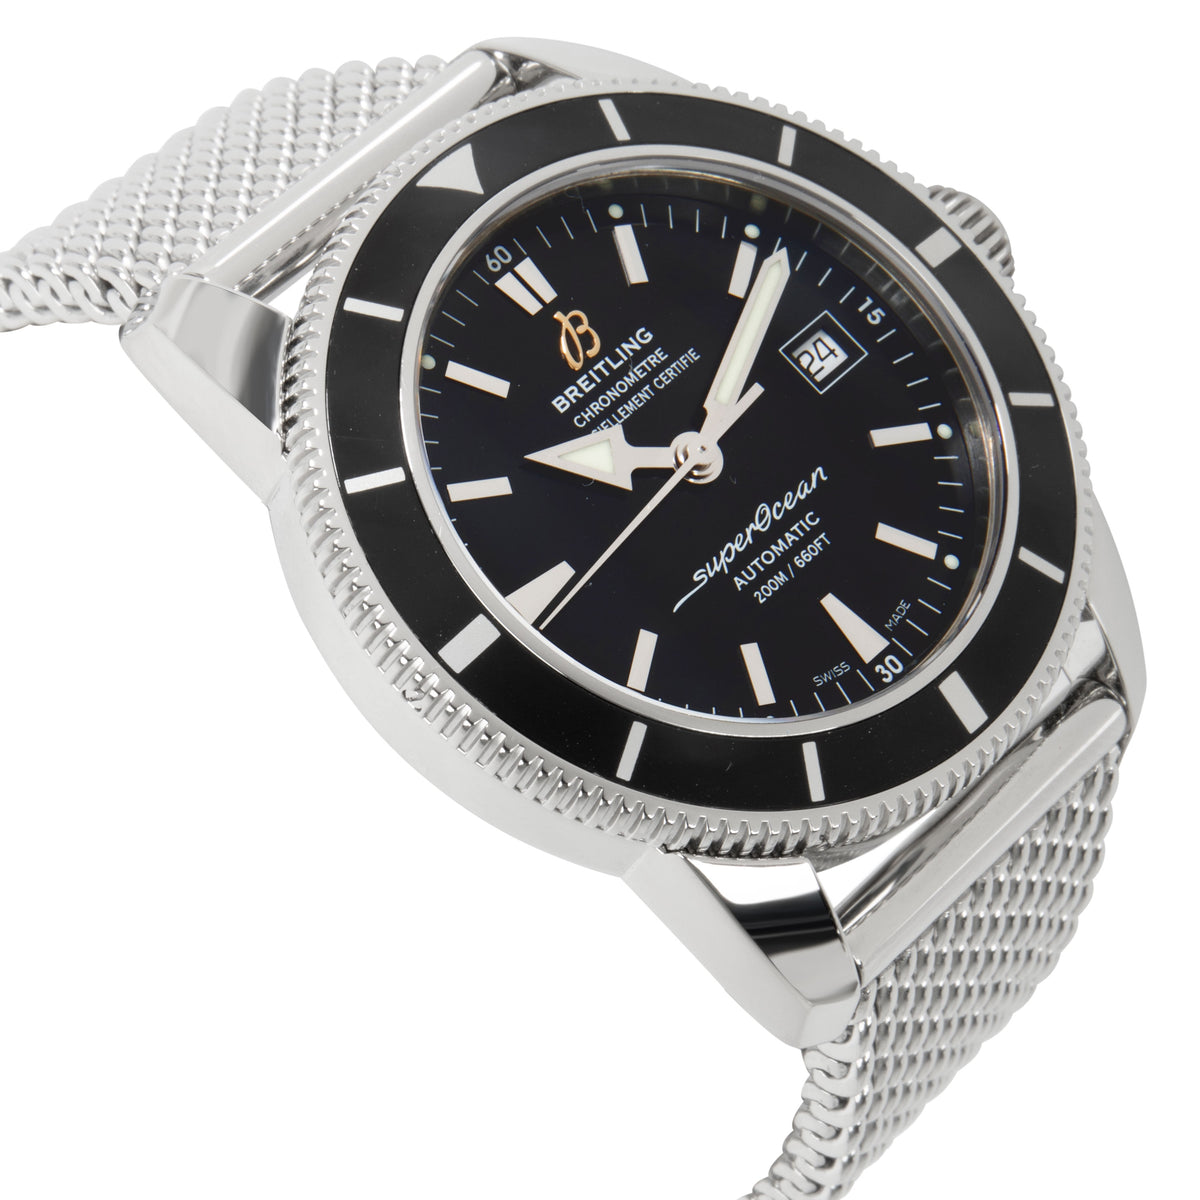 Breitling Superocean A173214/BA61 Men's Watch in  Stainless Steel